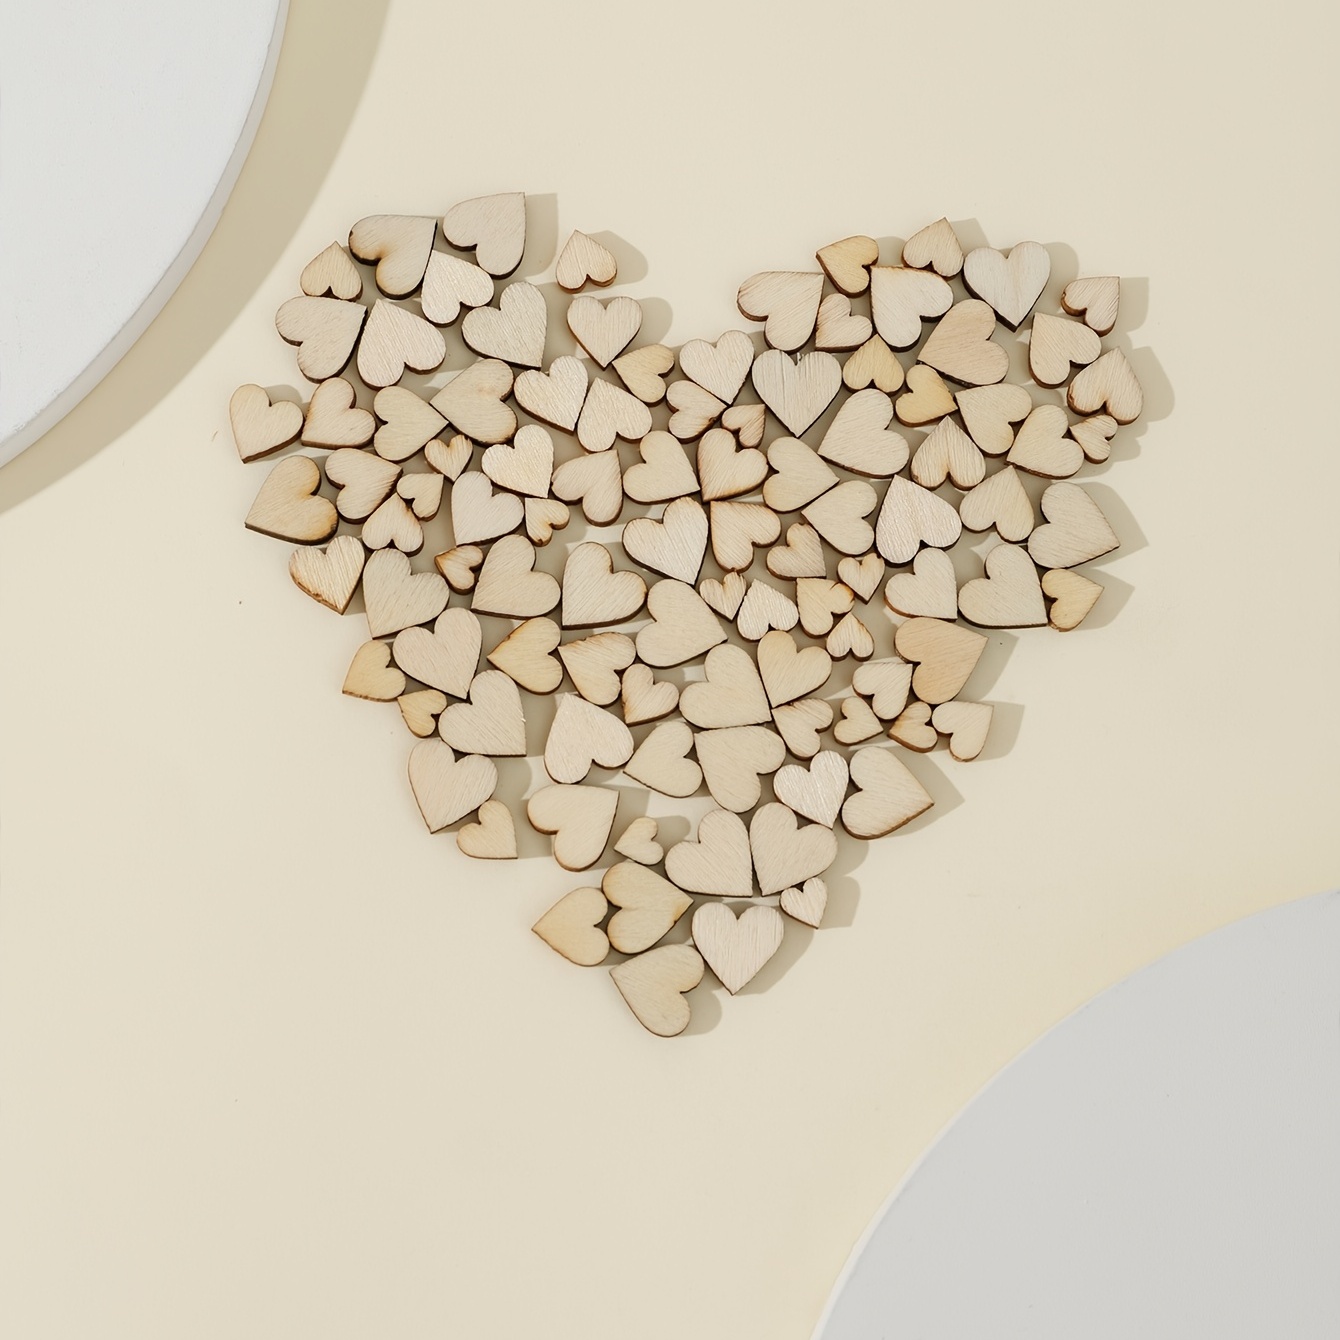 Wood Heart Cutouts Wood Heart Slices Embellishments Ornaments for